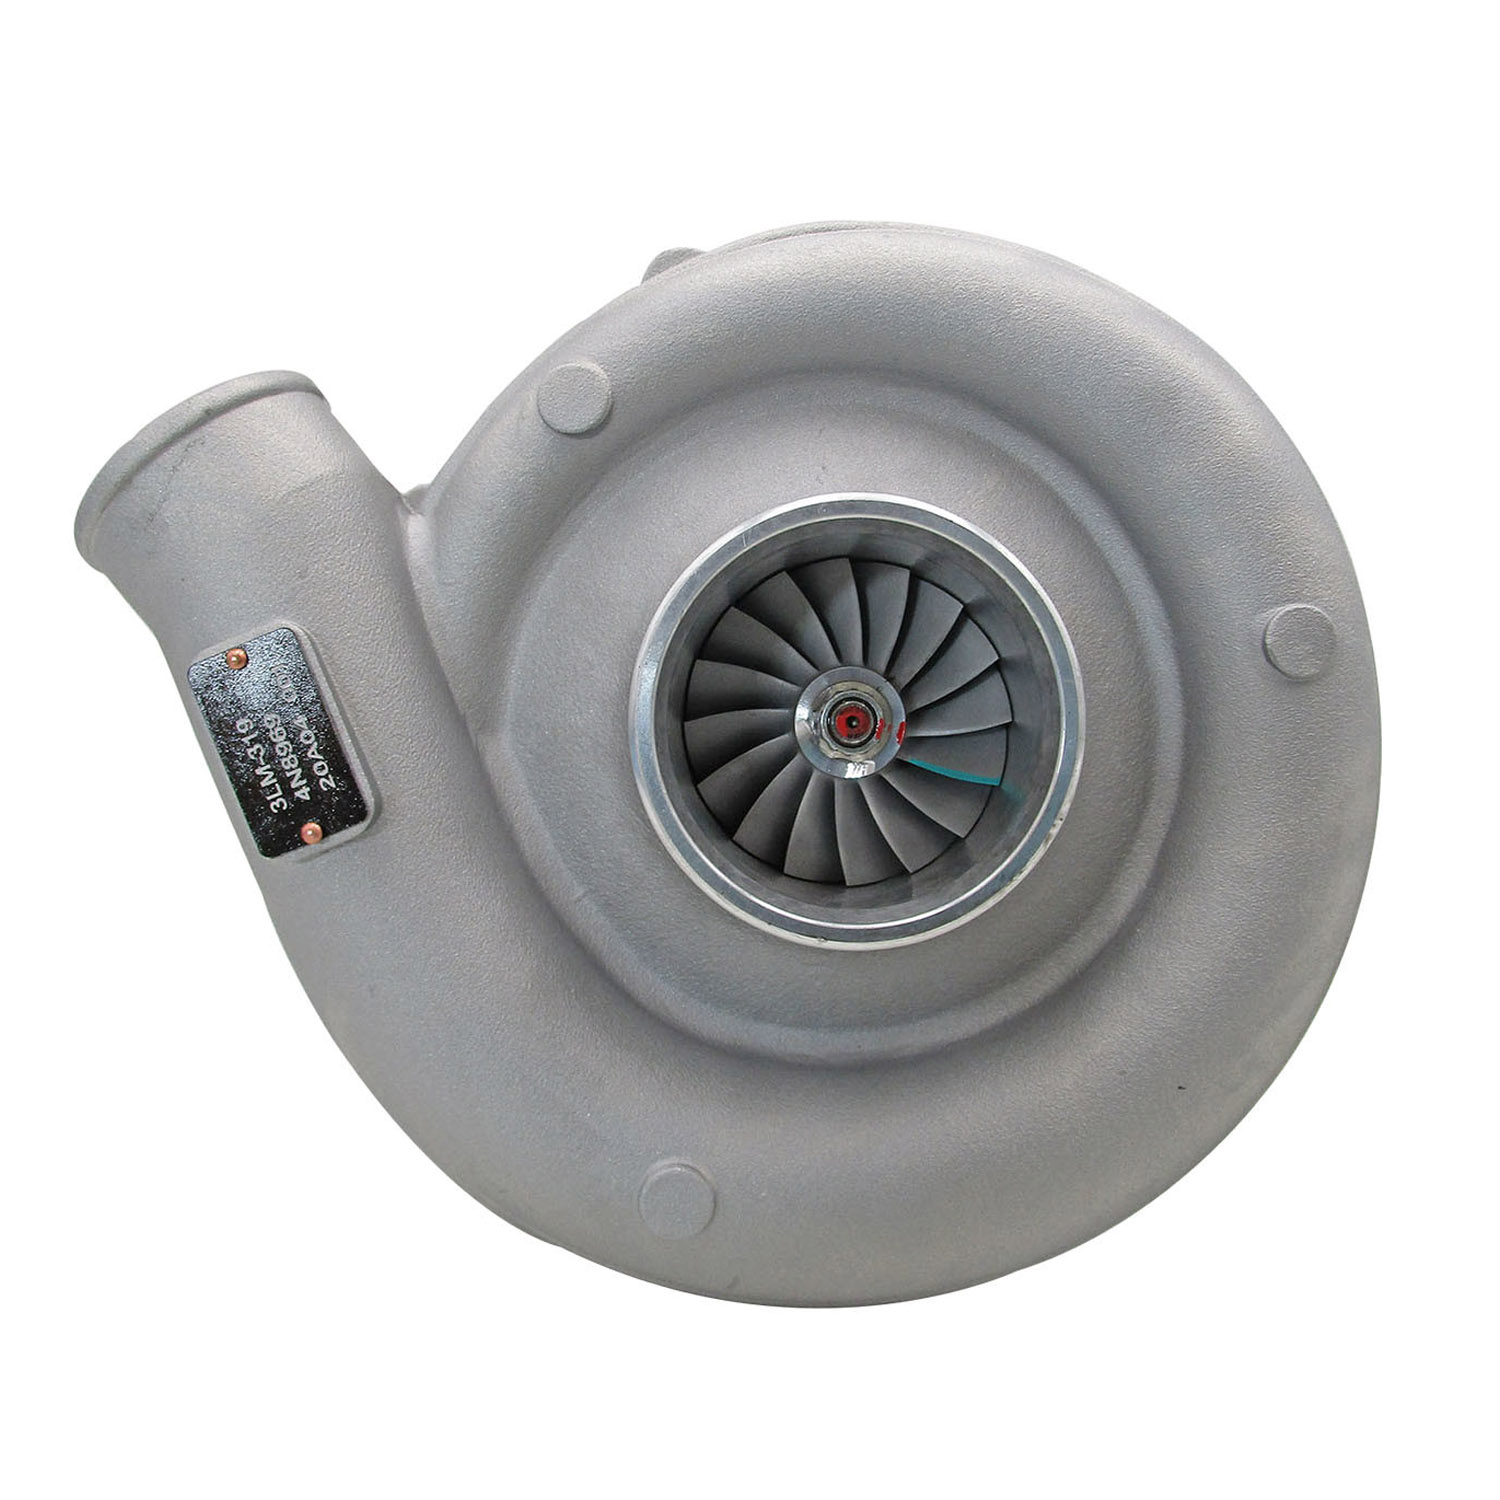 Turbocharger for Caterpillar 3LM D333C 3306 159623 172493 178049